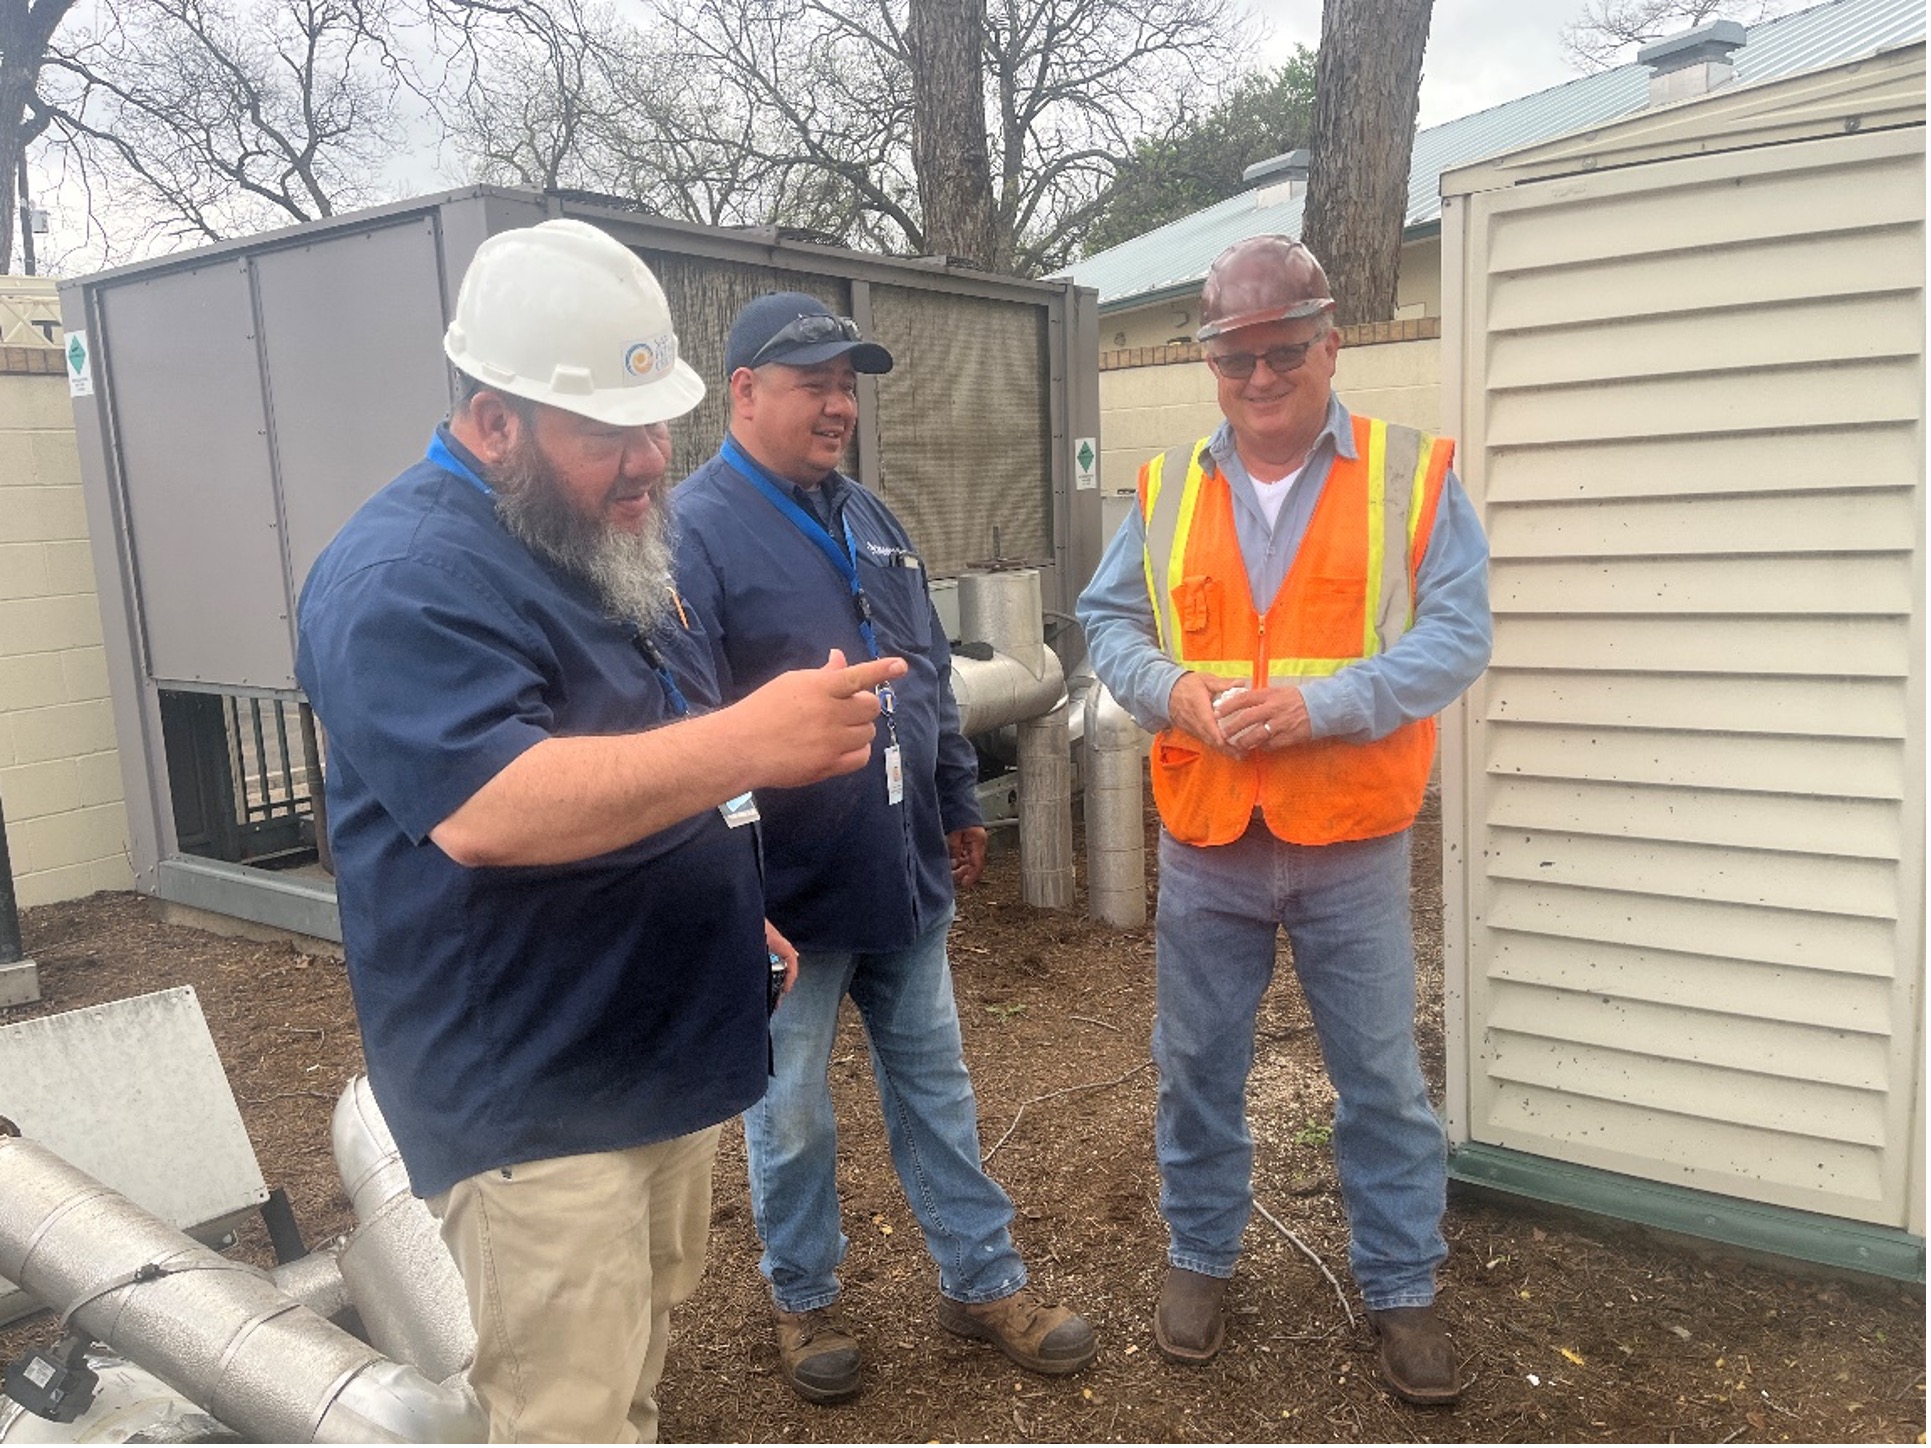 Three men in safety gear inspect new hvac chiller